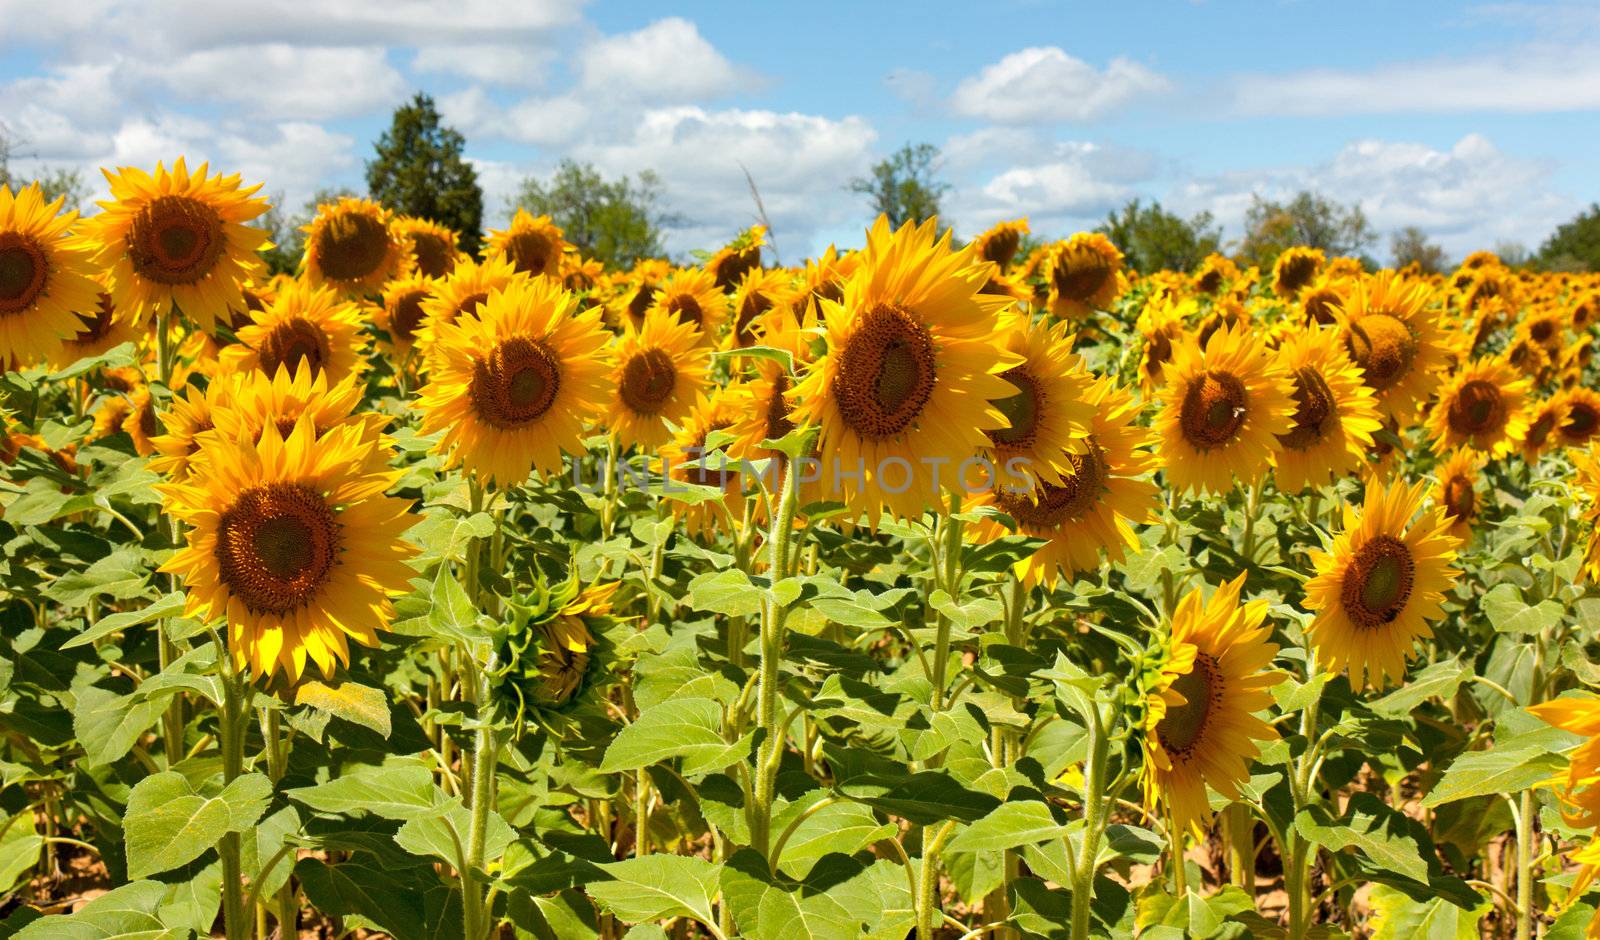 field of sunflowers under a July sun